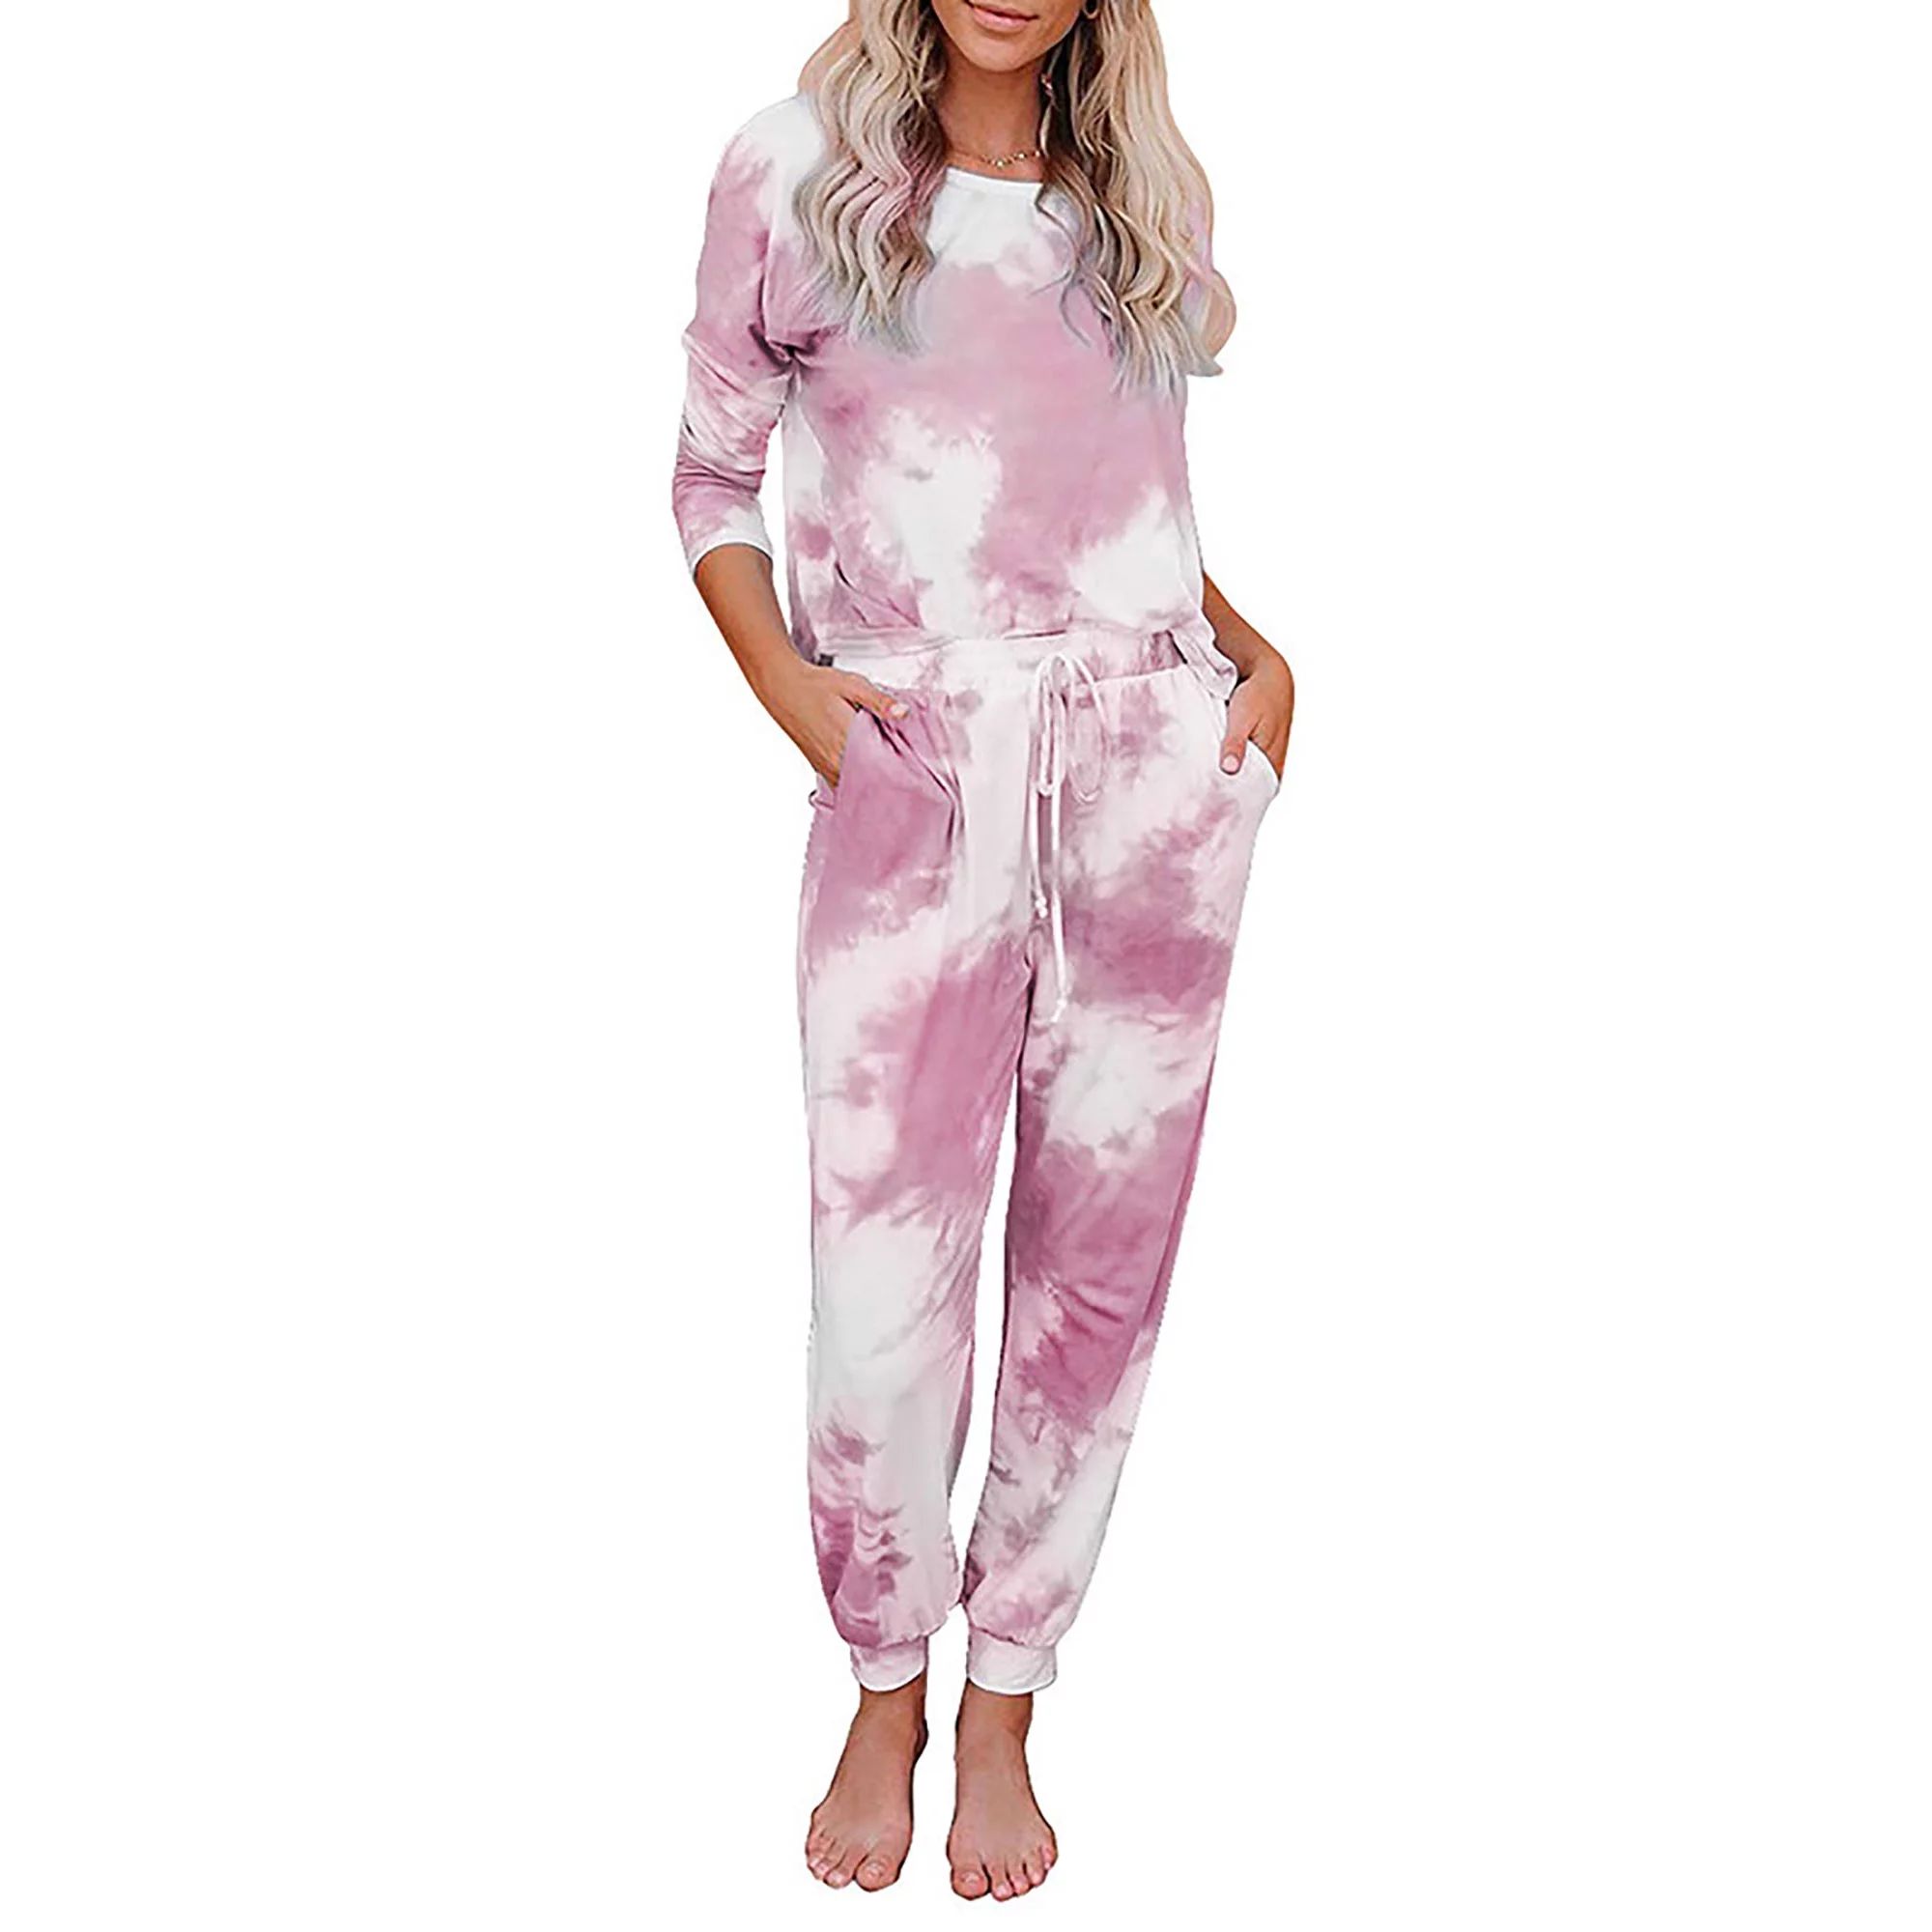 Selfieee - Selfieee Women's Tie Dye Loungewear Pajama Sets Pullover Tops Sweatsuits Tracksuit Set... | Walmart (US)